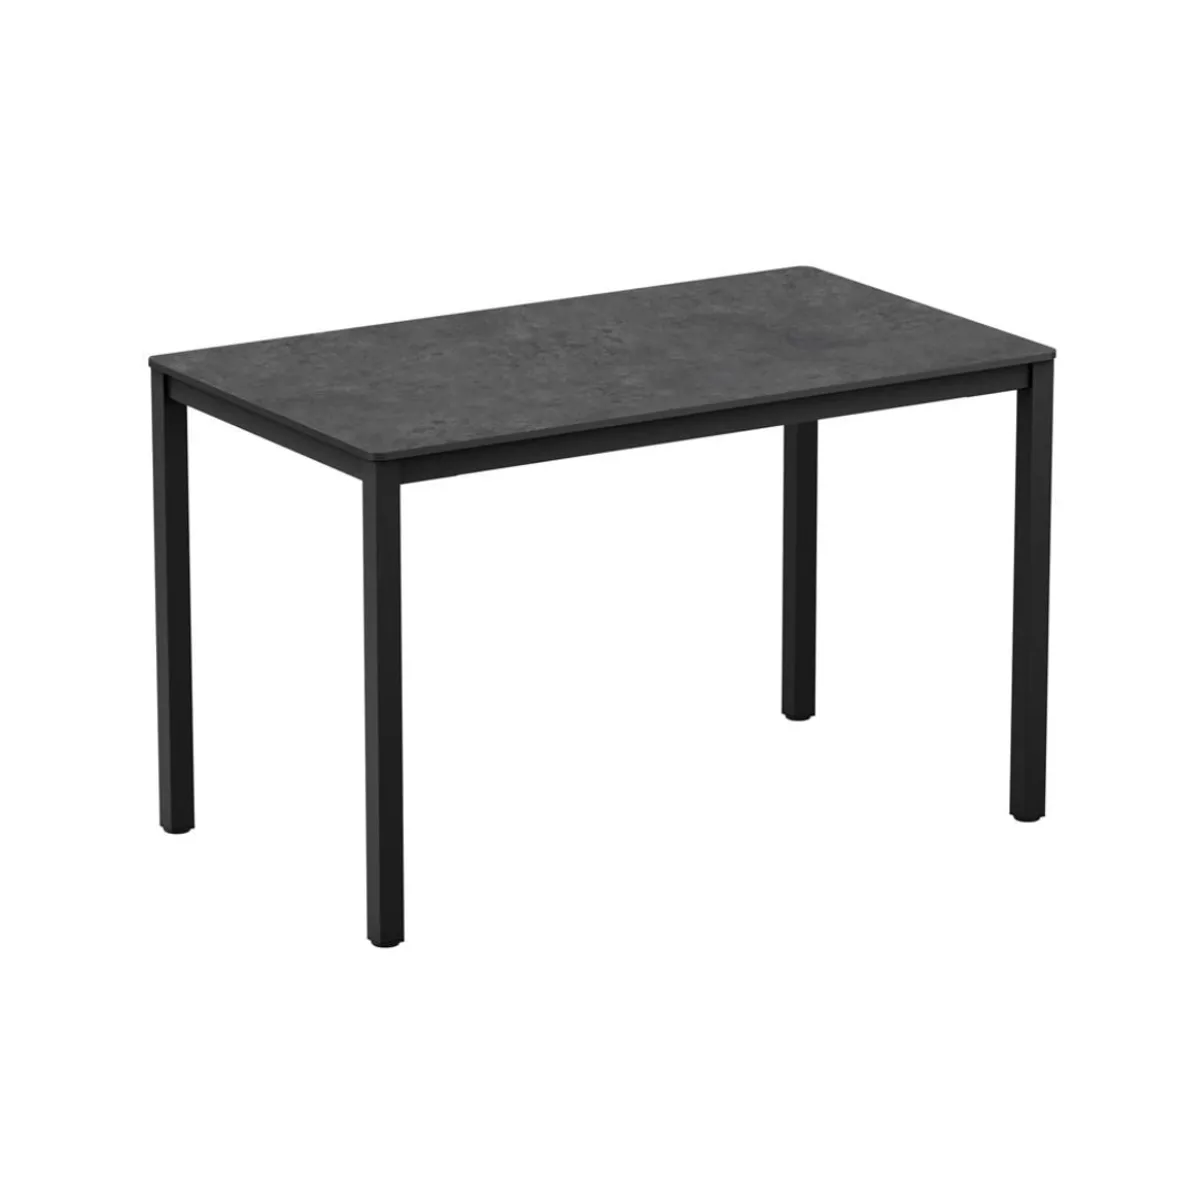 Scopos rectangular table